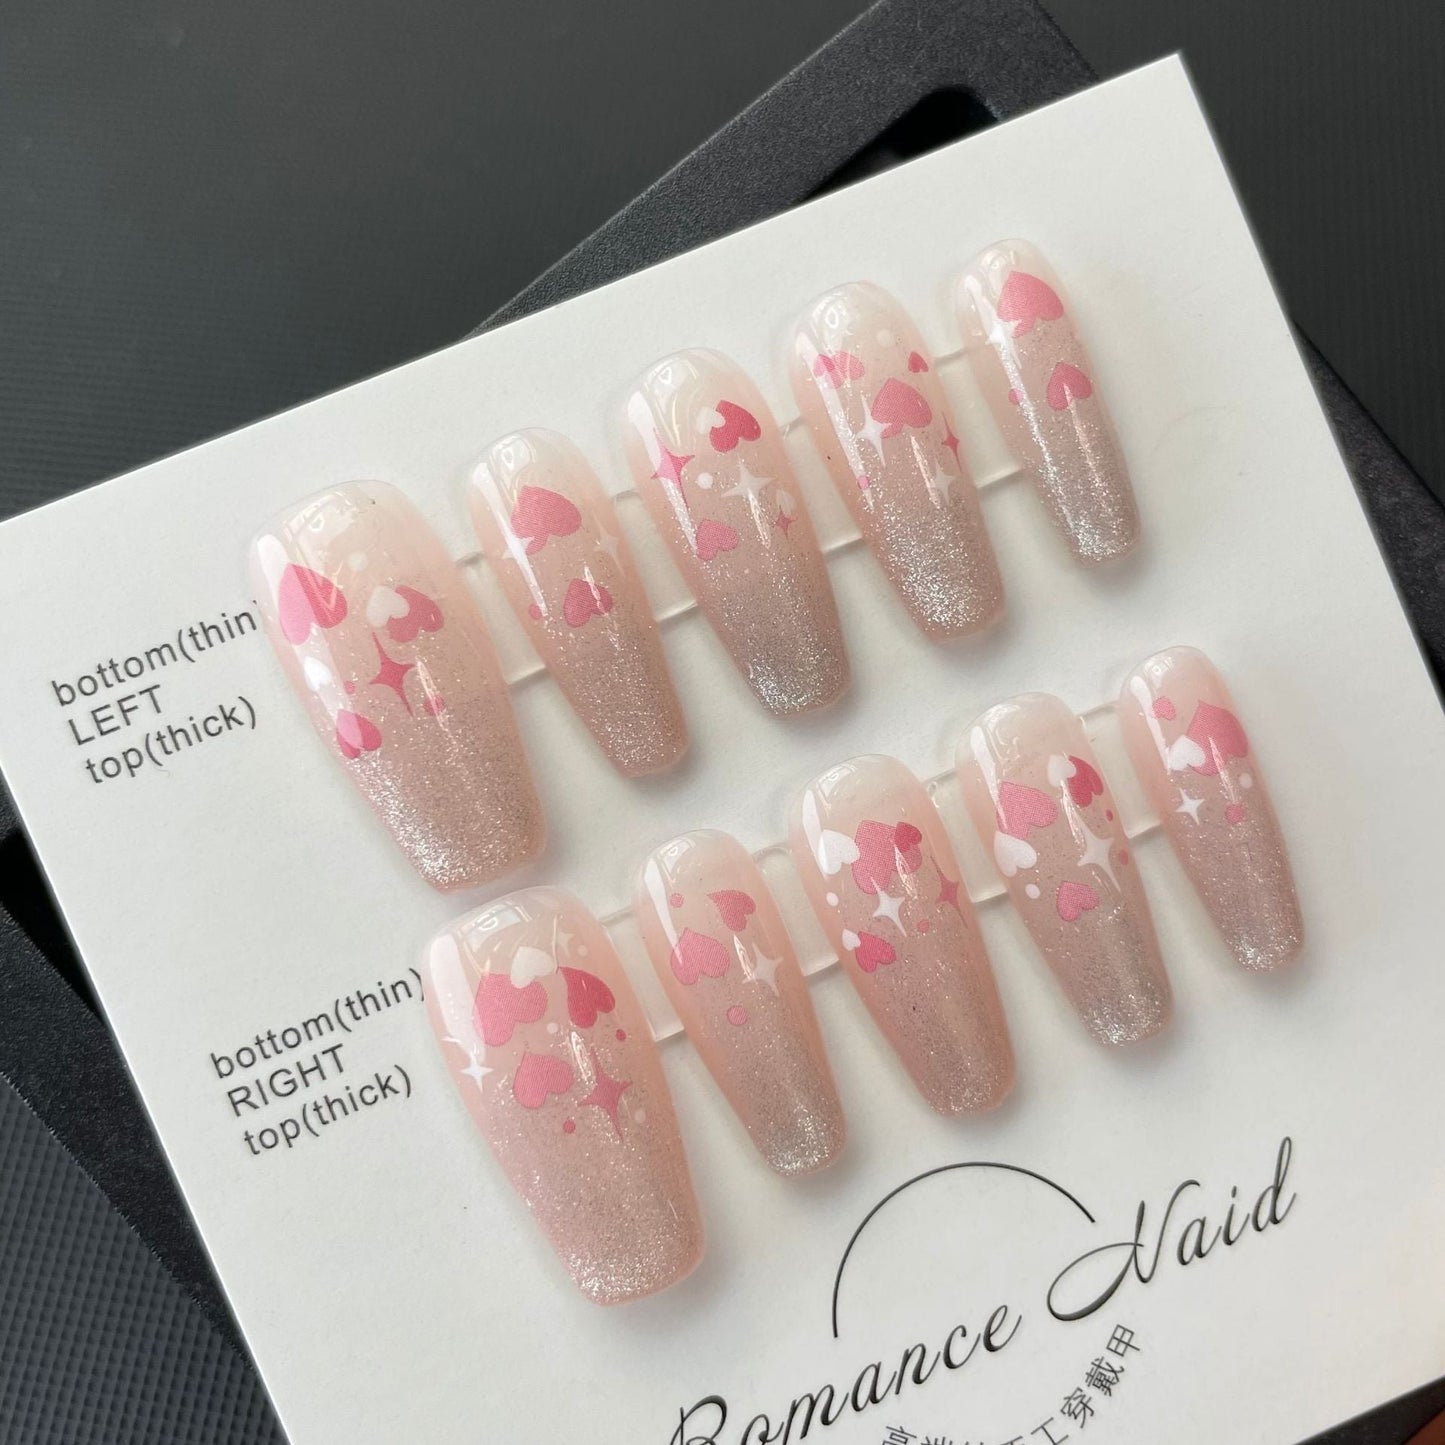 702 Peach Love style press on nails 100% handmade false nails pink